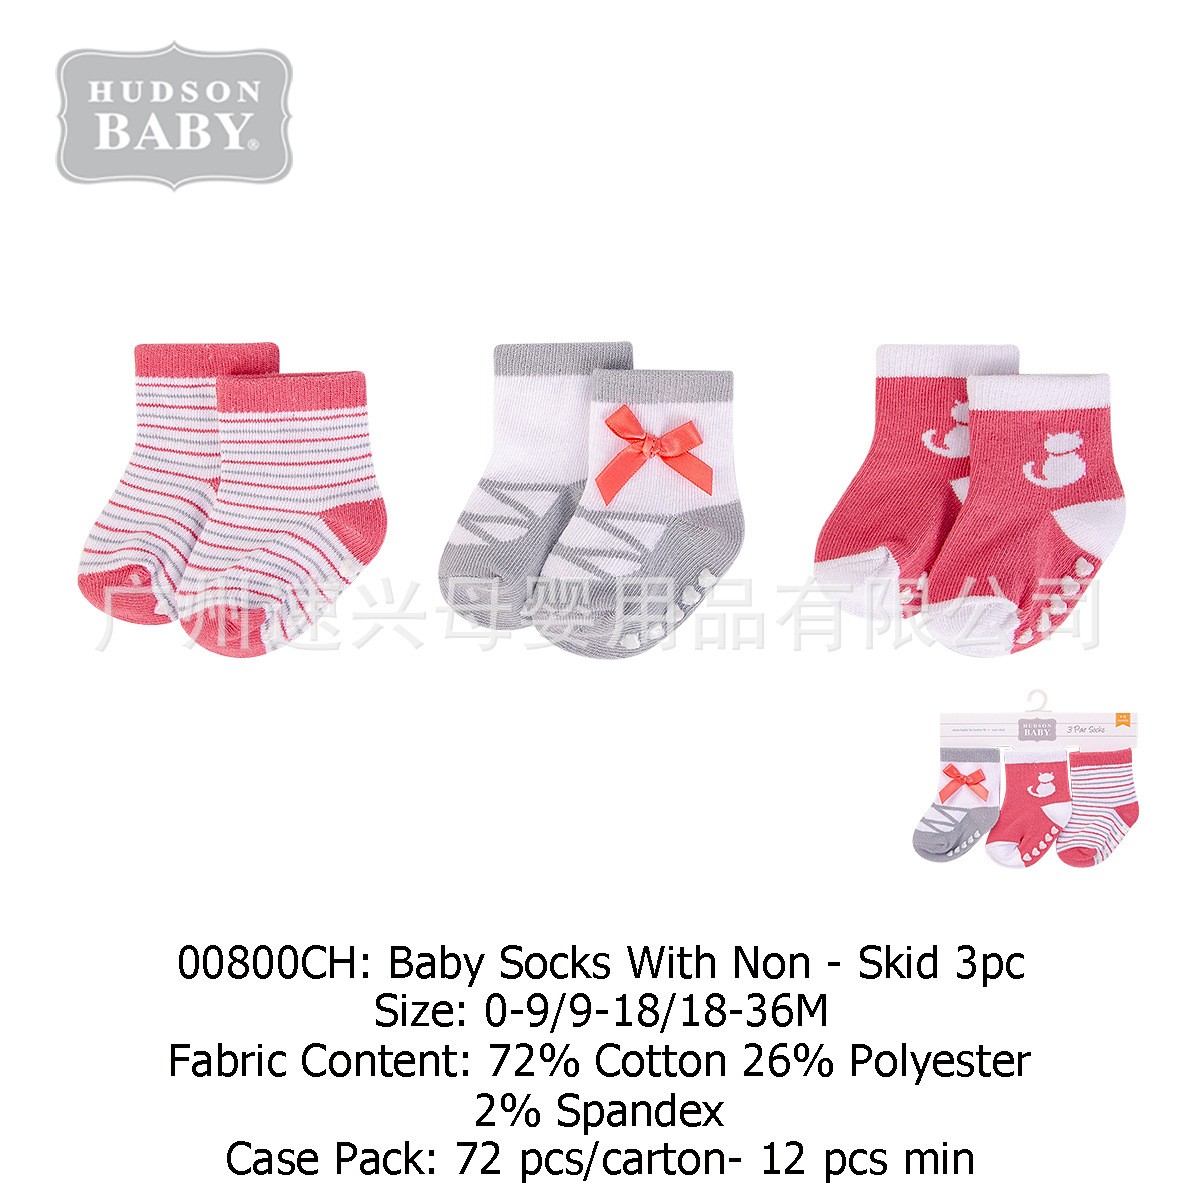 Hudson 00800 Baby Socks with Non-Skid 3pcs (0-9M/9-18M/18-36M)